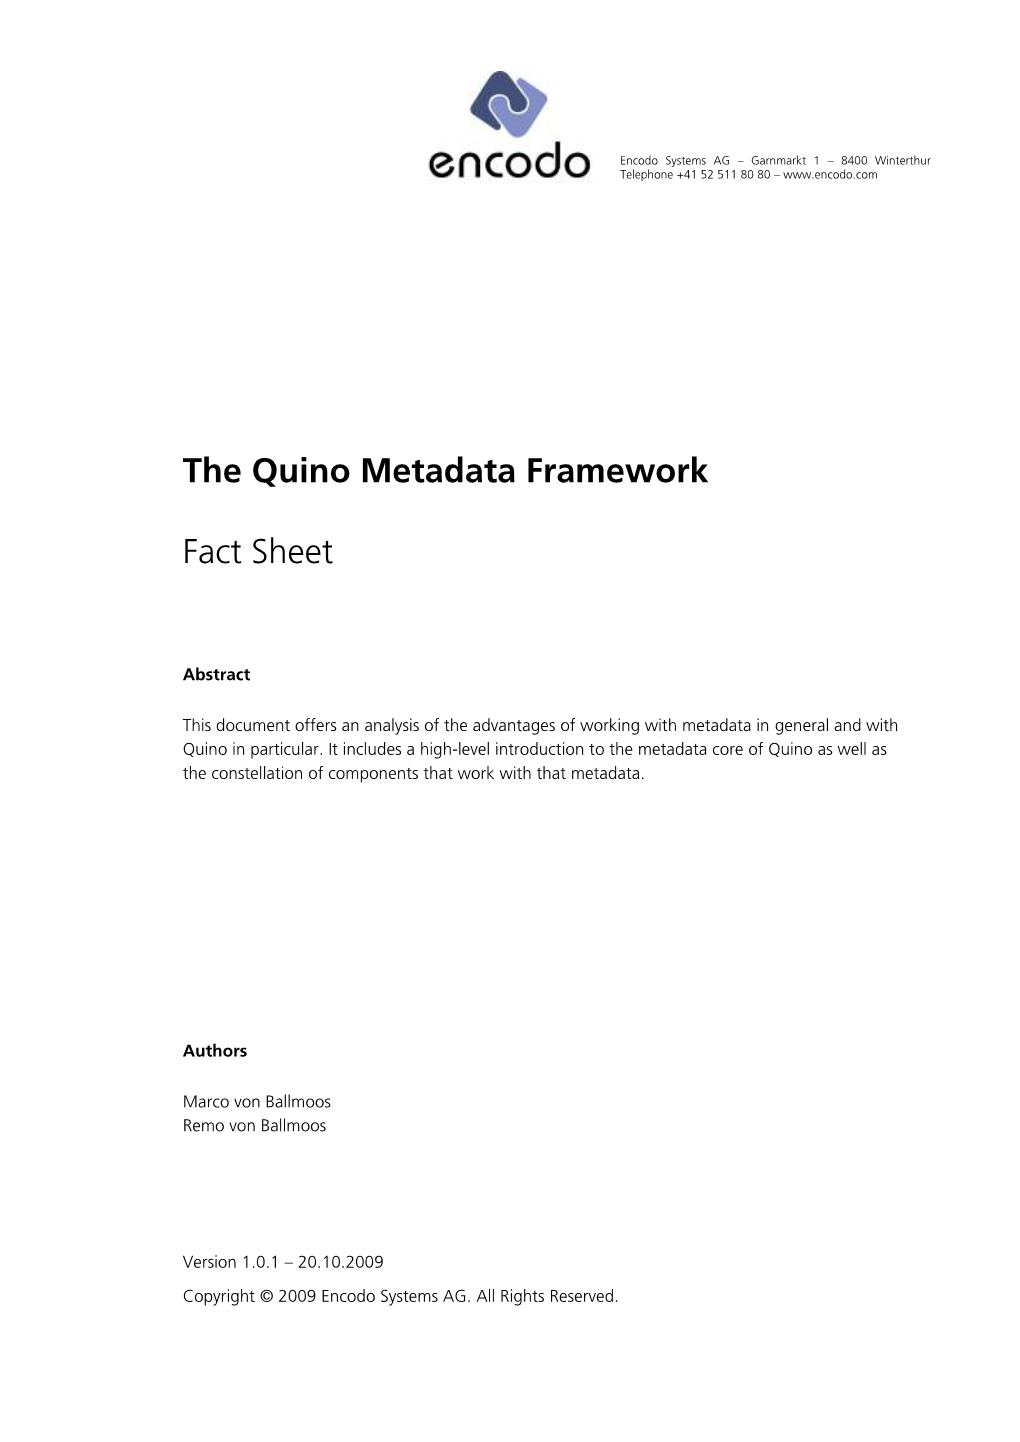 The Quino Metadata Framework Fact Sheet